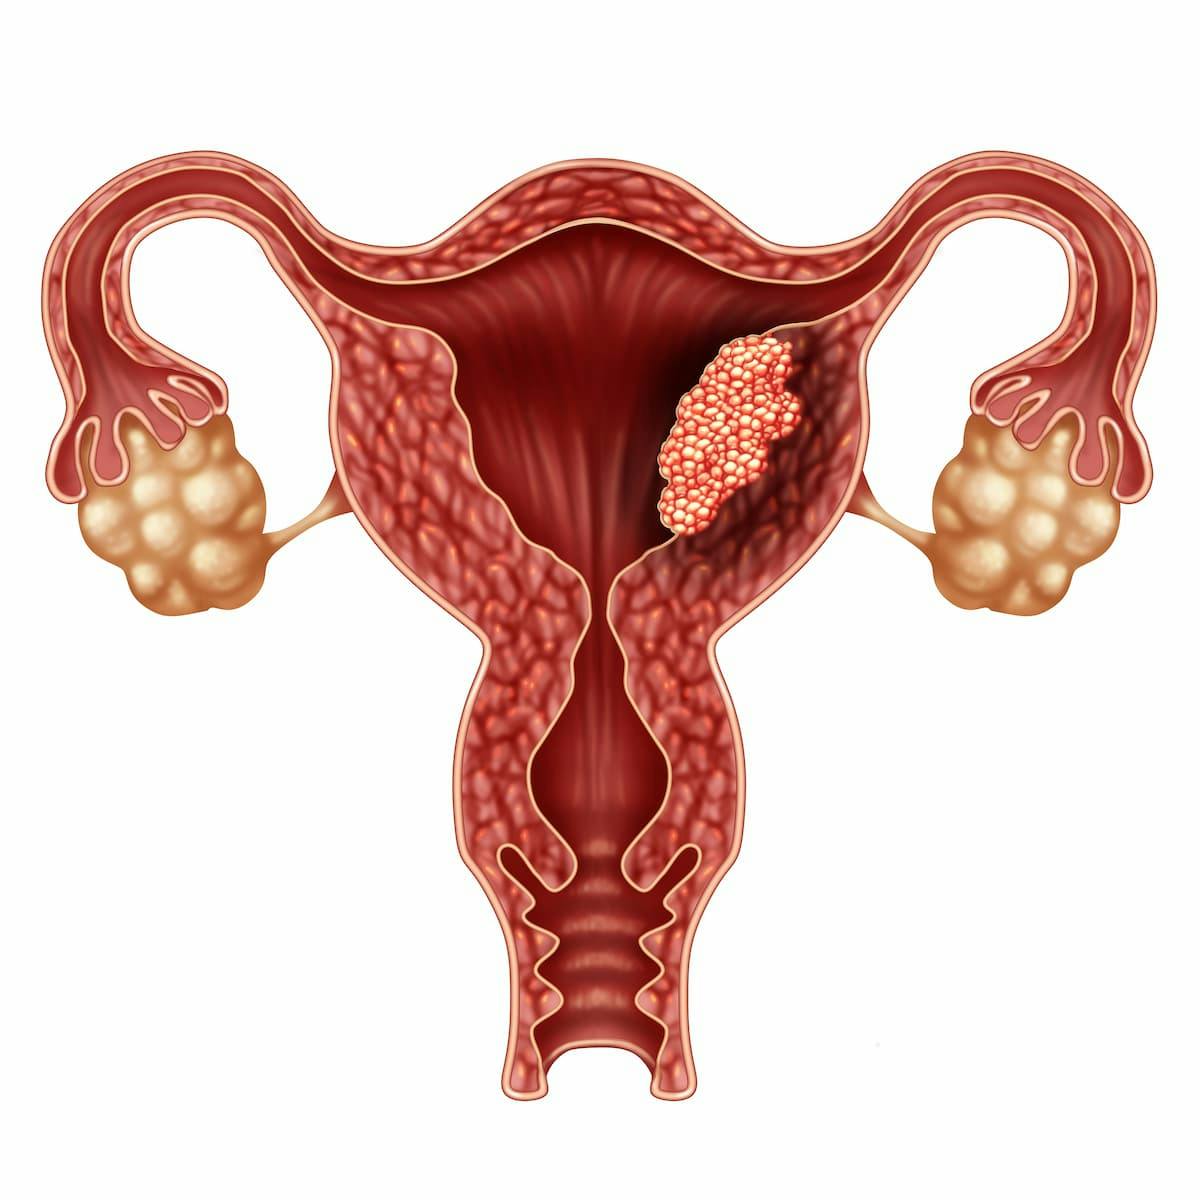 Avelumab/Chemo Warrants Consideration in Advanced Endometrial Cancer | Image Credit: © freshidea - stock.adobe.com.